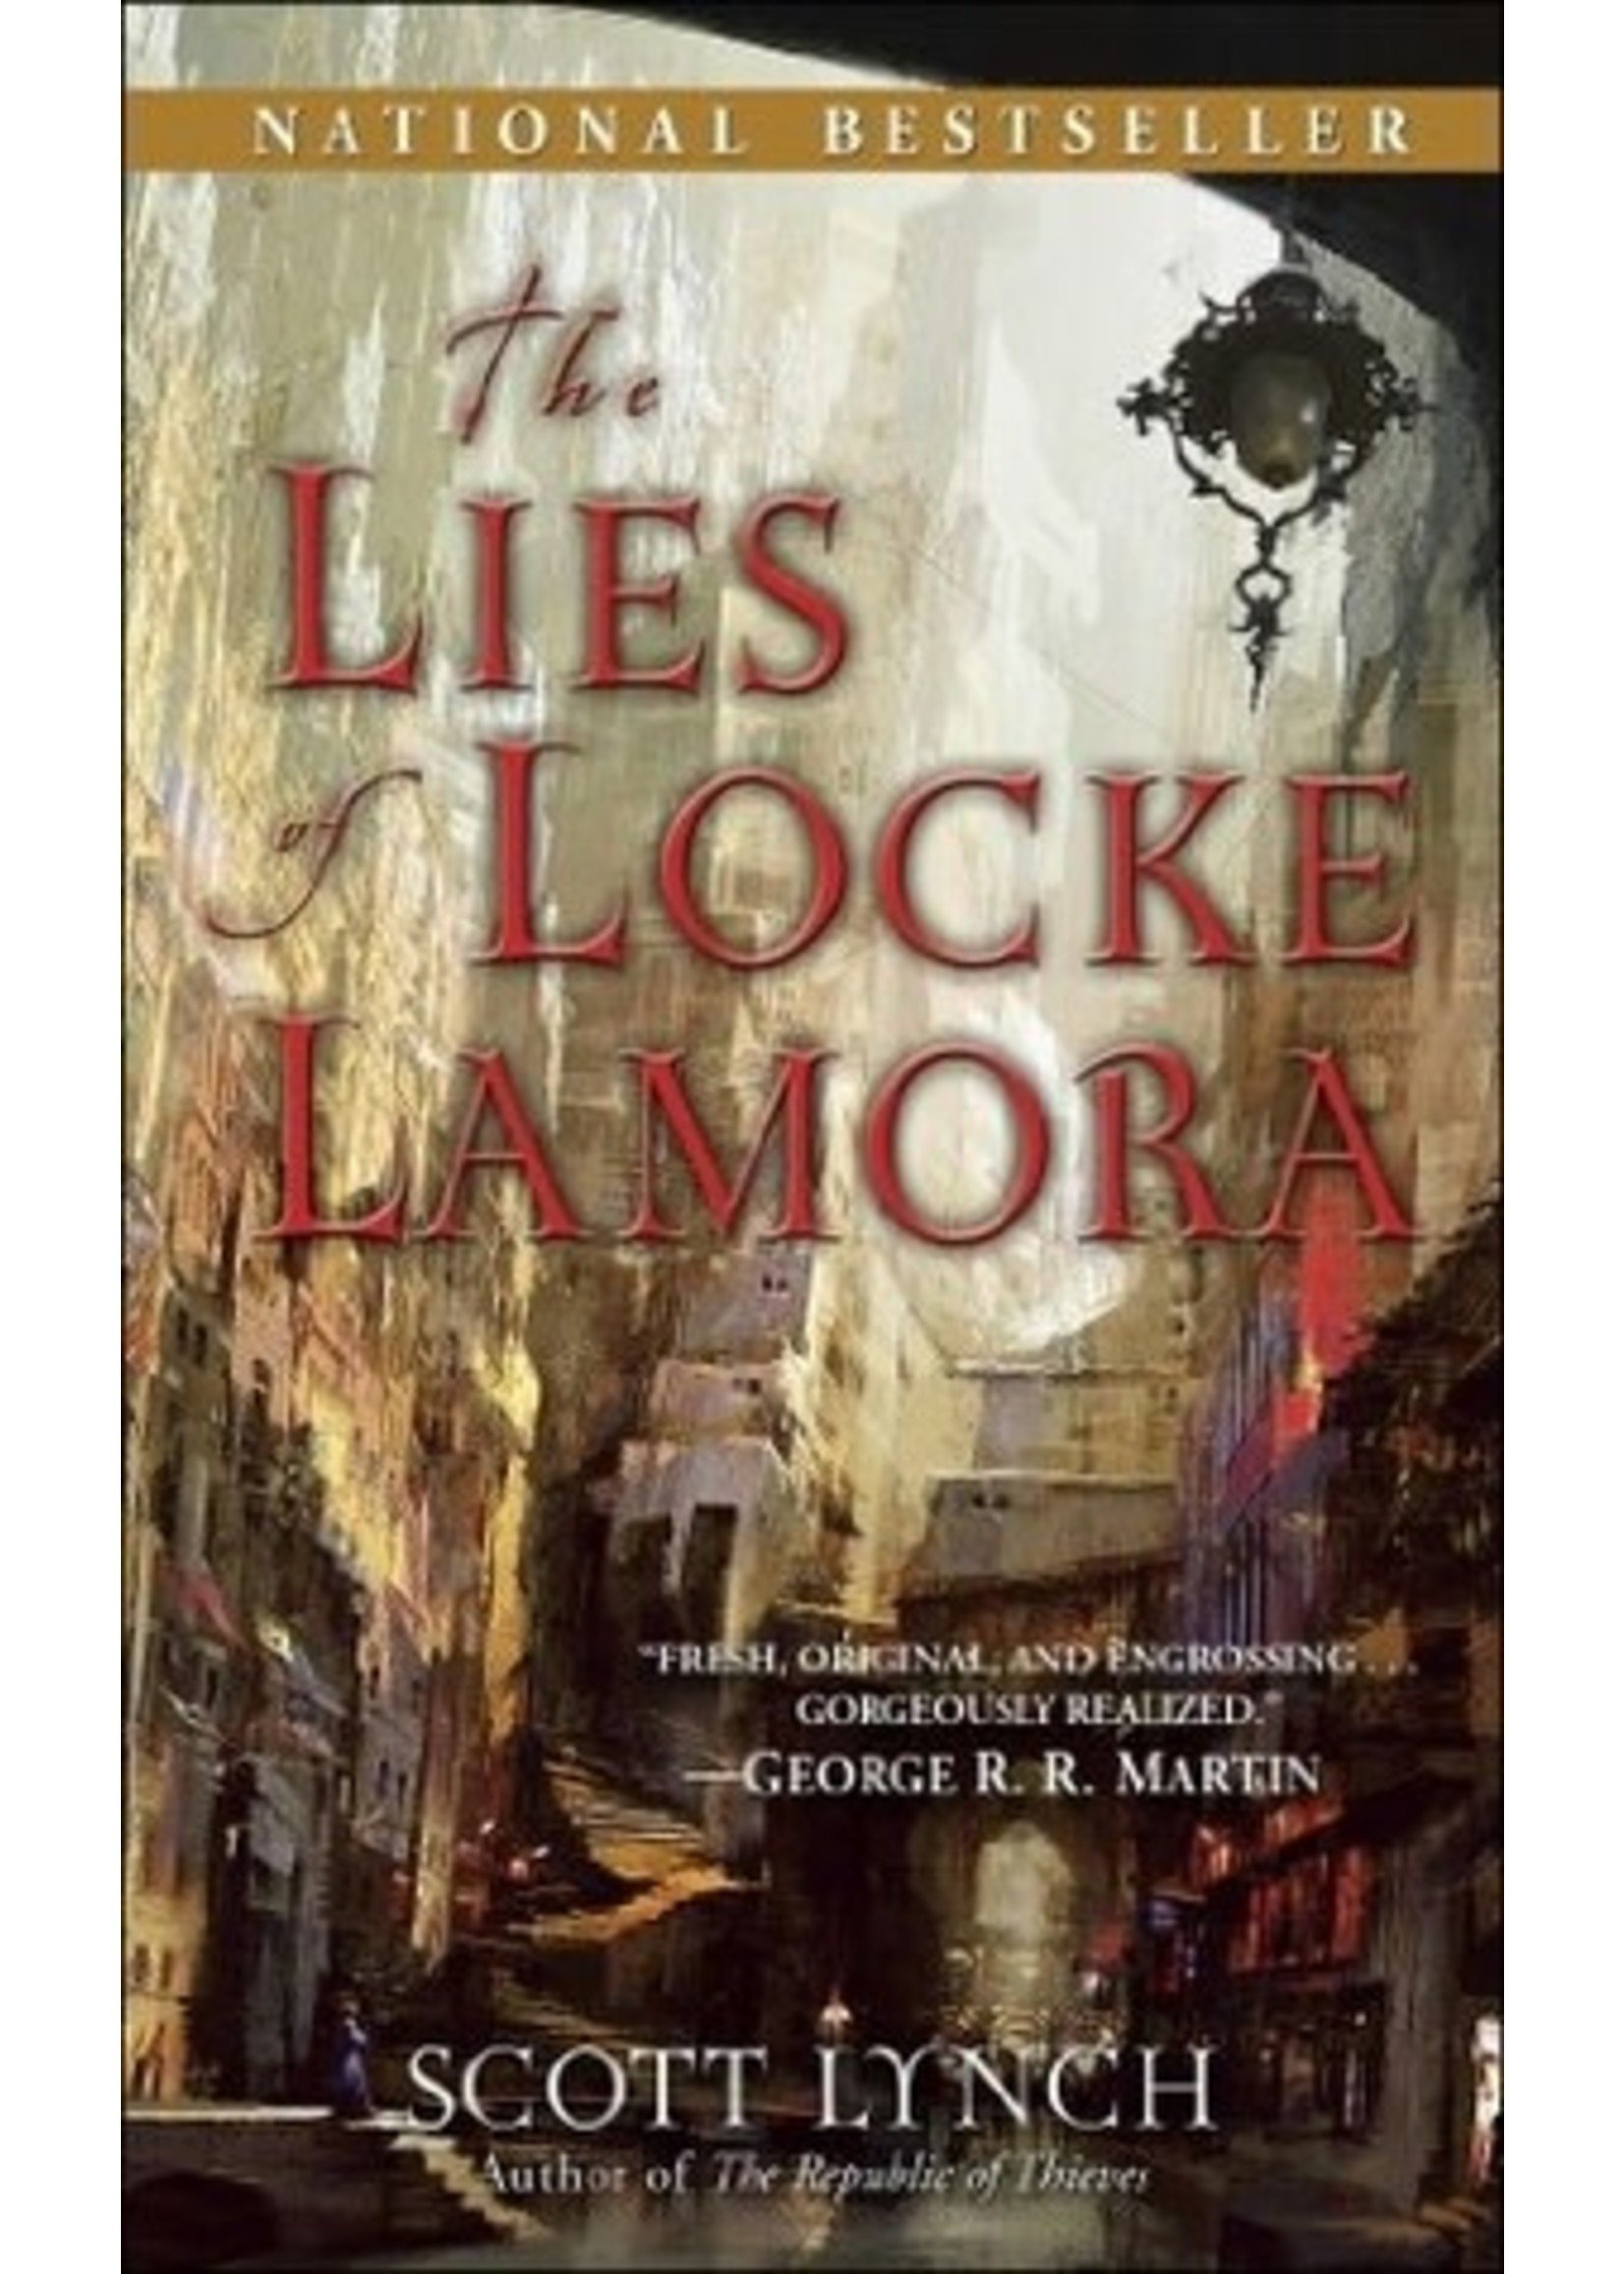 The Lies of Locke Lamora (Gentleman Bastard #1) by Scott Lynch